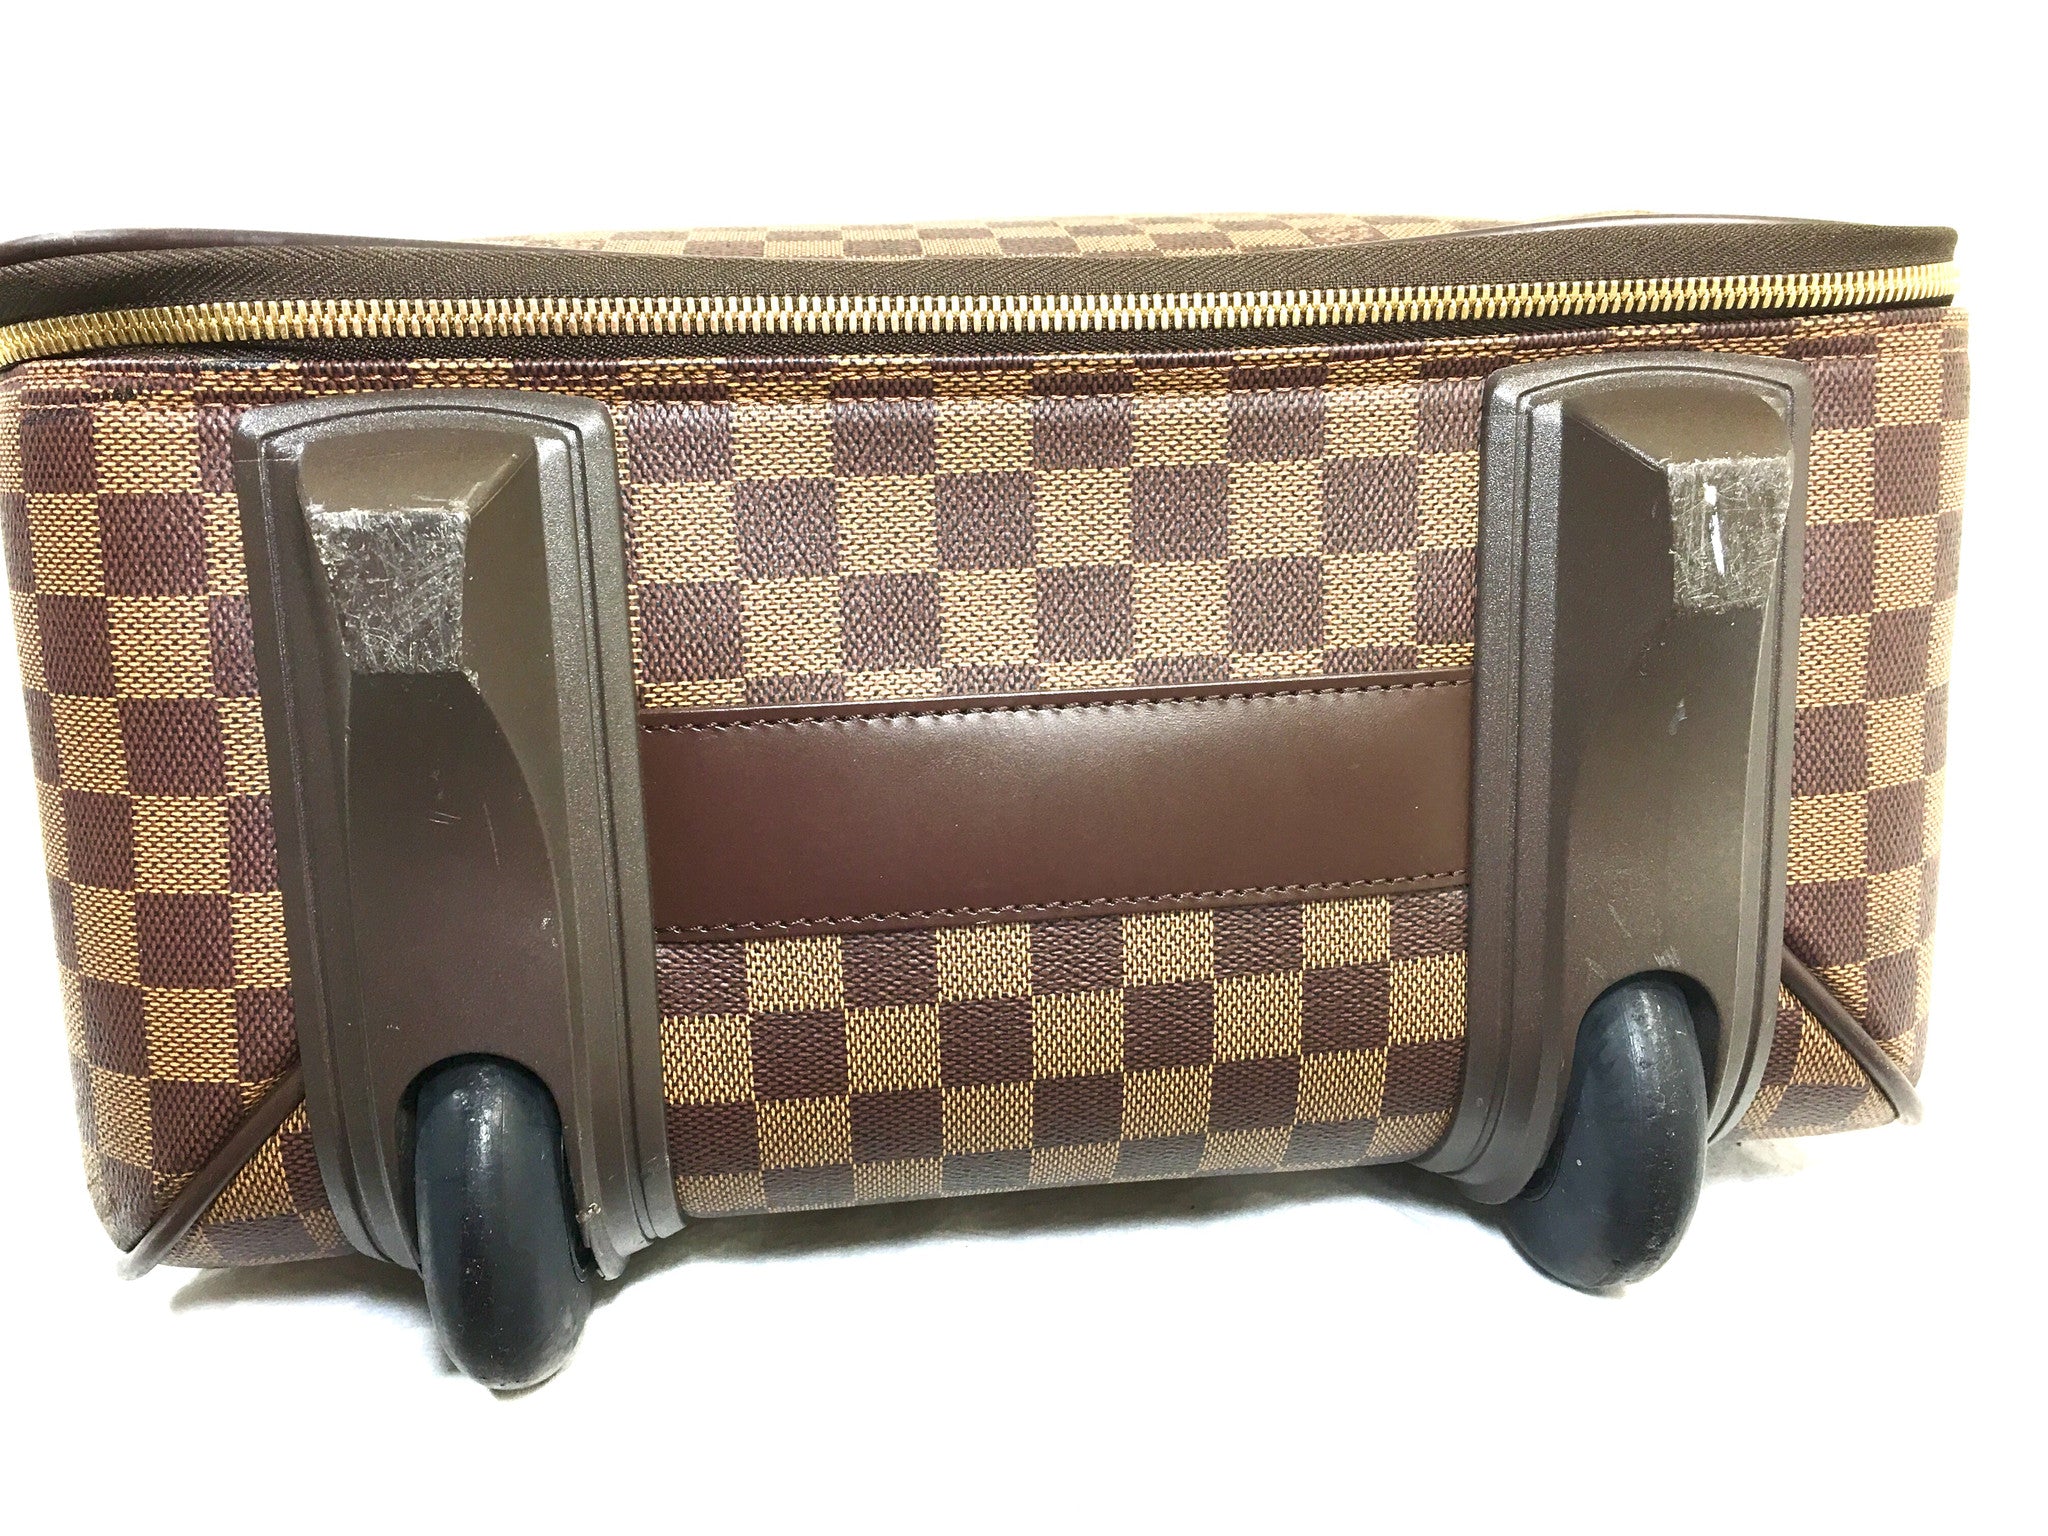 LOUIS VUITTON Damier Ebene Pegase 55 Suitcase Roller Luggage